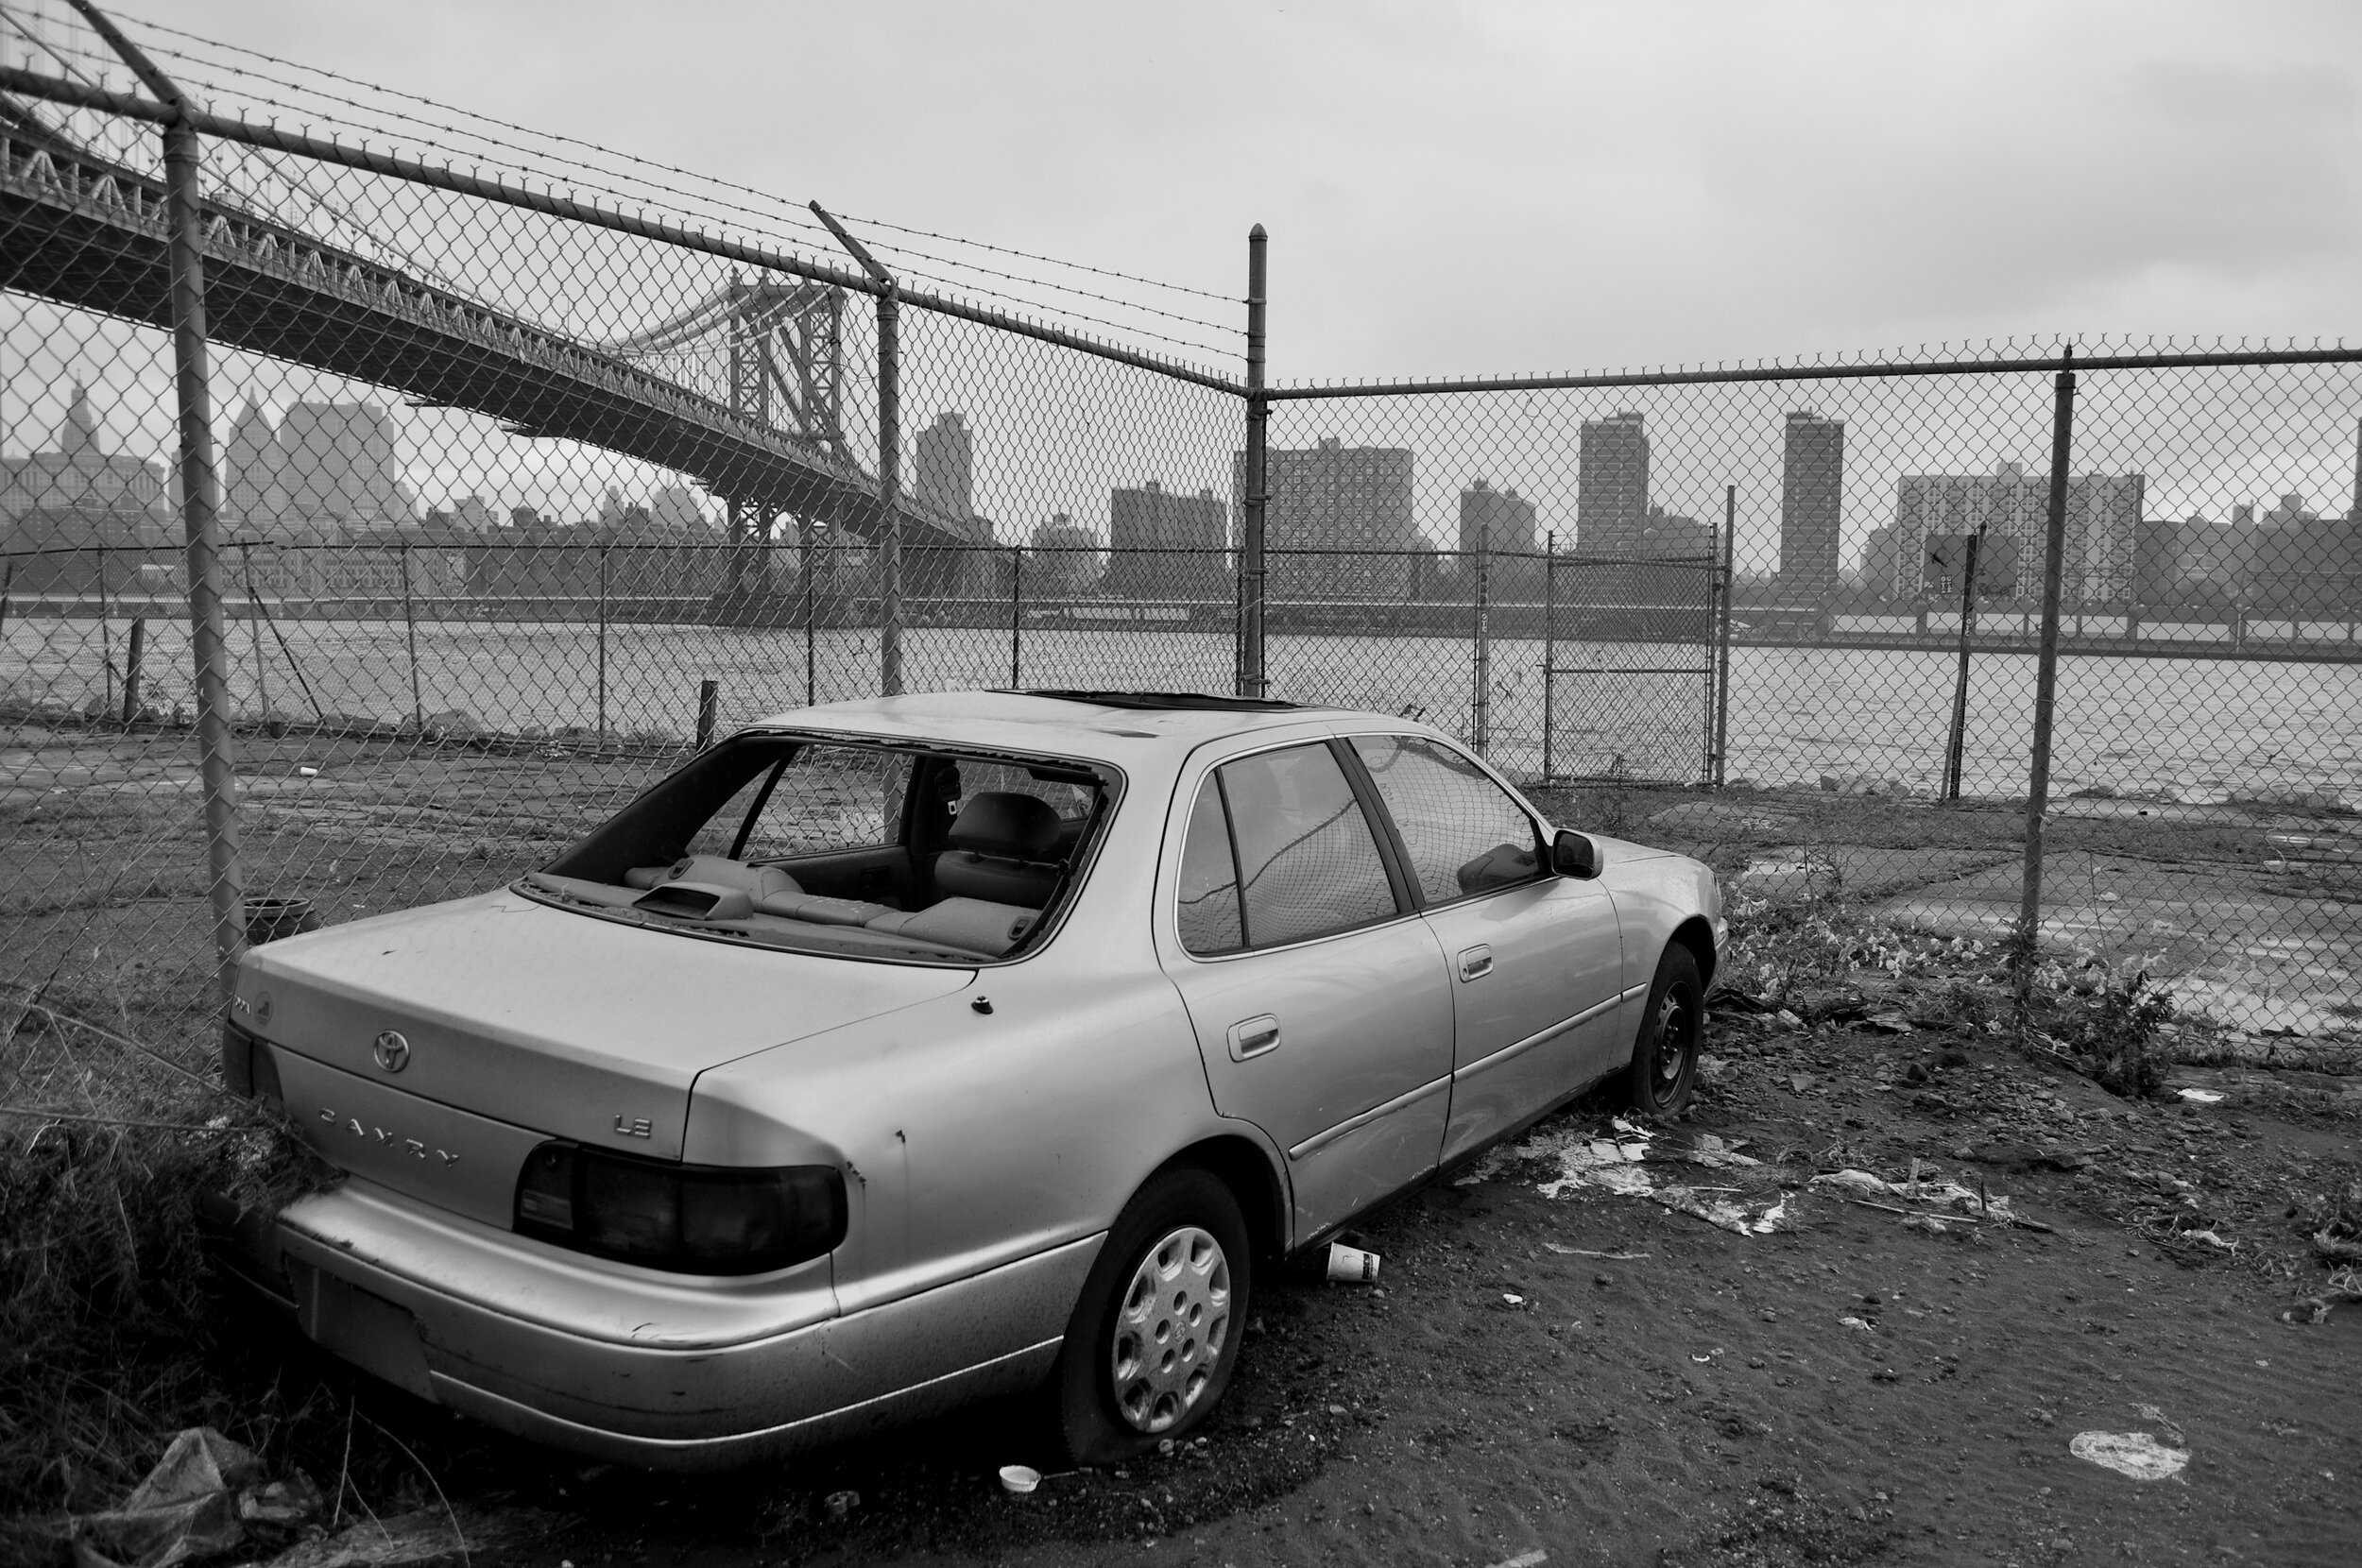 Missing Back Windshield - Brooklyn, New York (2012)